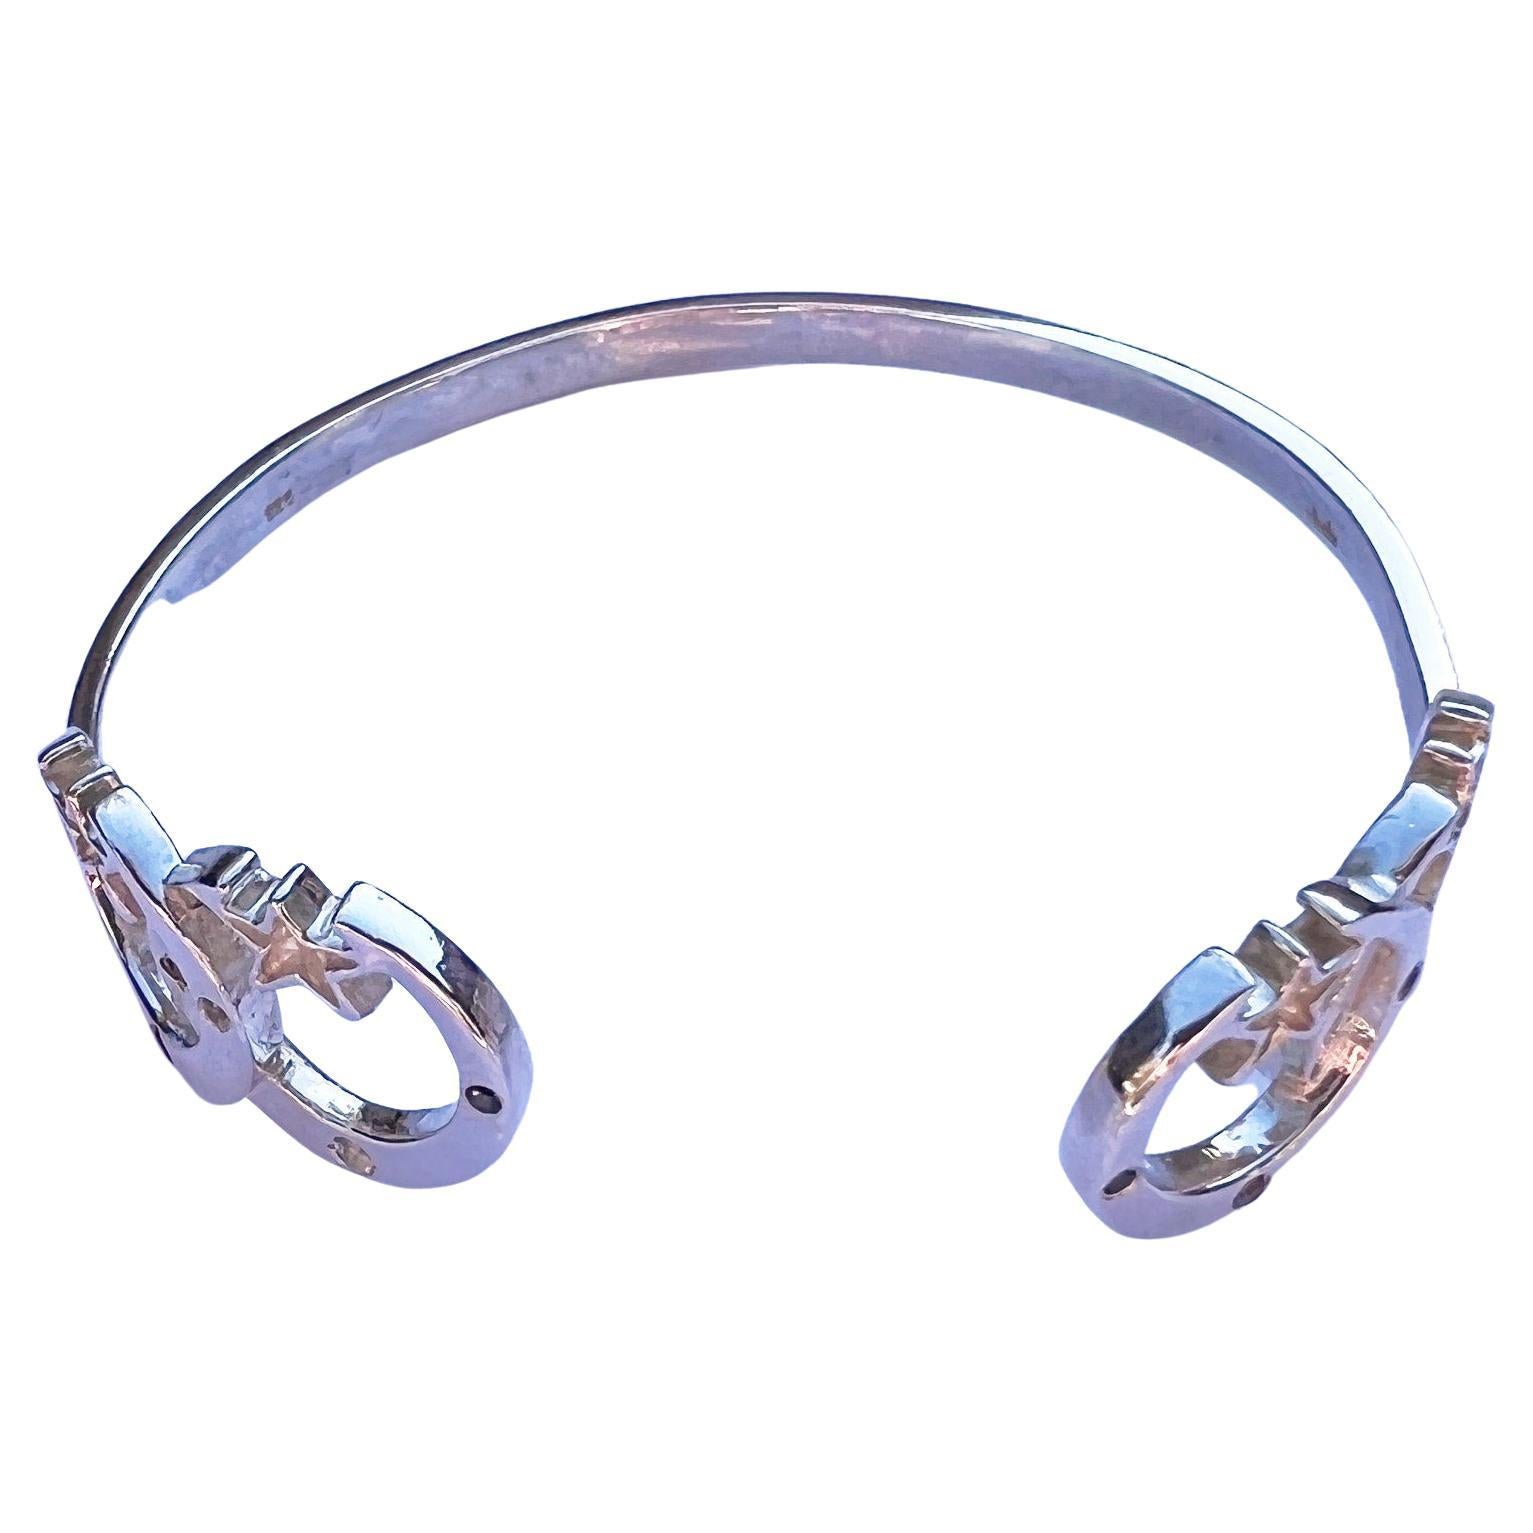 Black Diamond Toumaline Iolite Crescent Moon Bangle Bracelet Silver J Dauphin For Sale 1